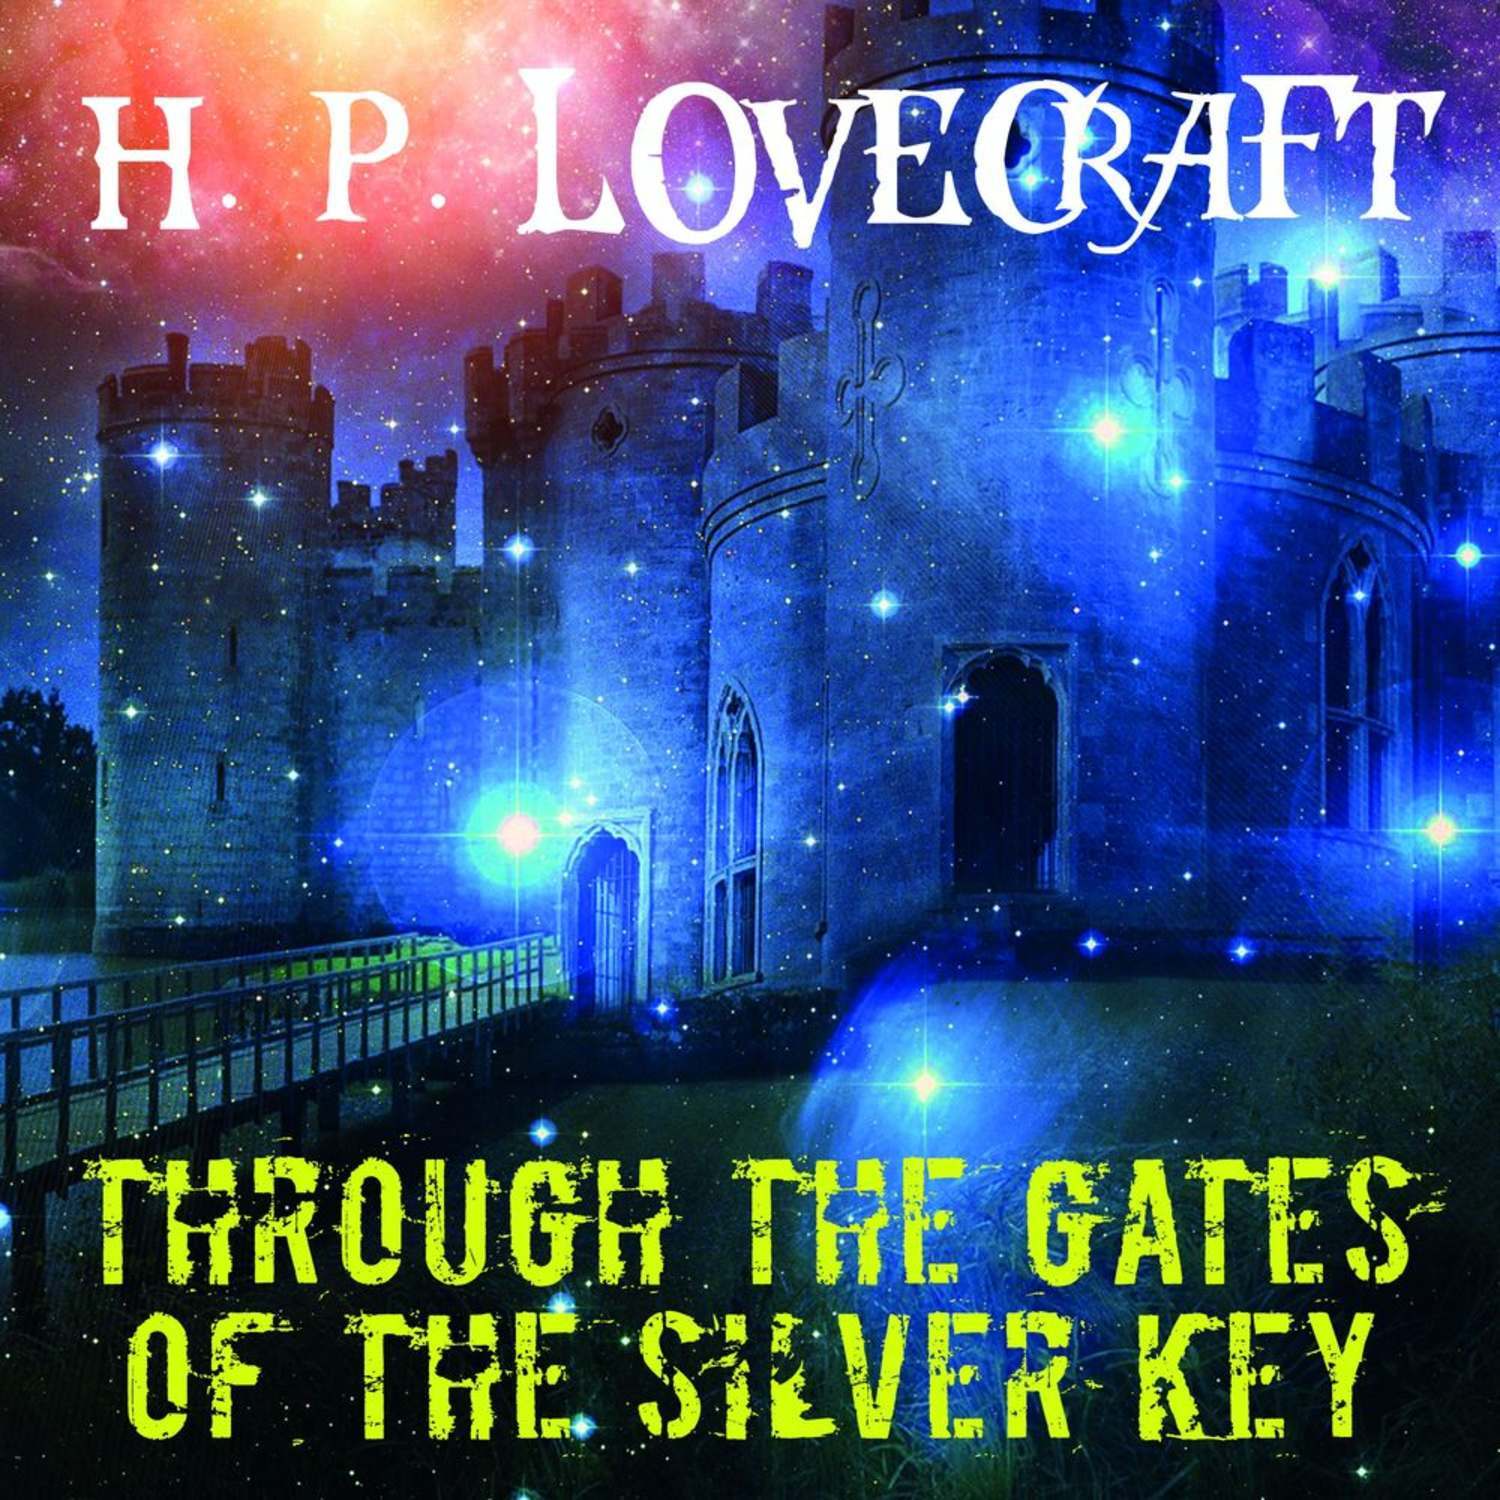 The Silver Key (Howard Lovecraft). Говард филлипс лавкрафт аудиокниги